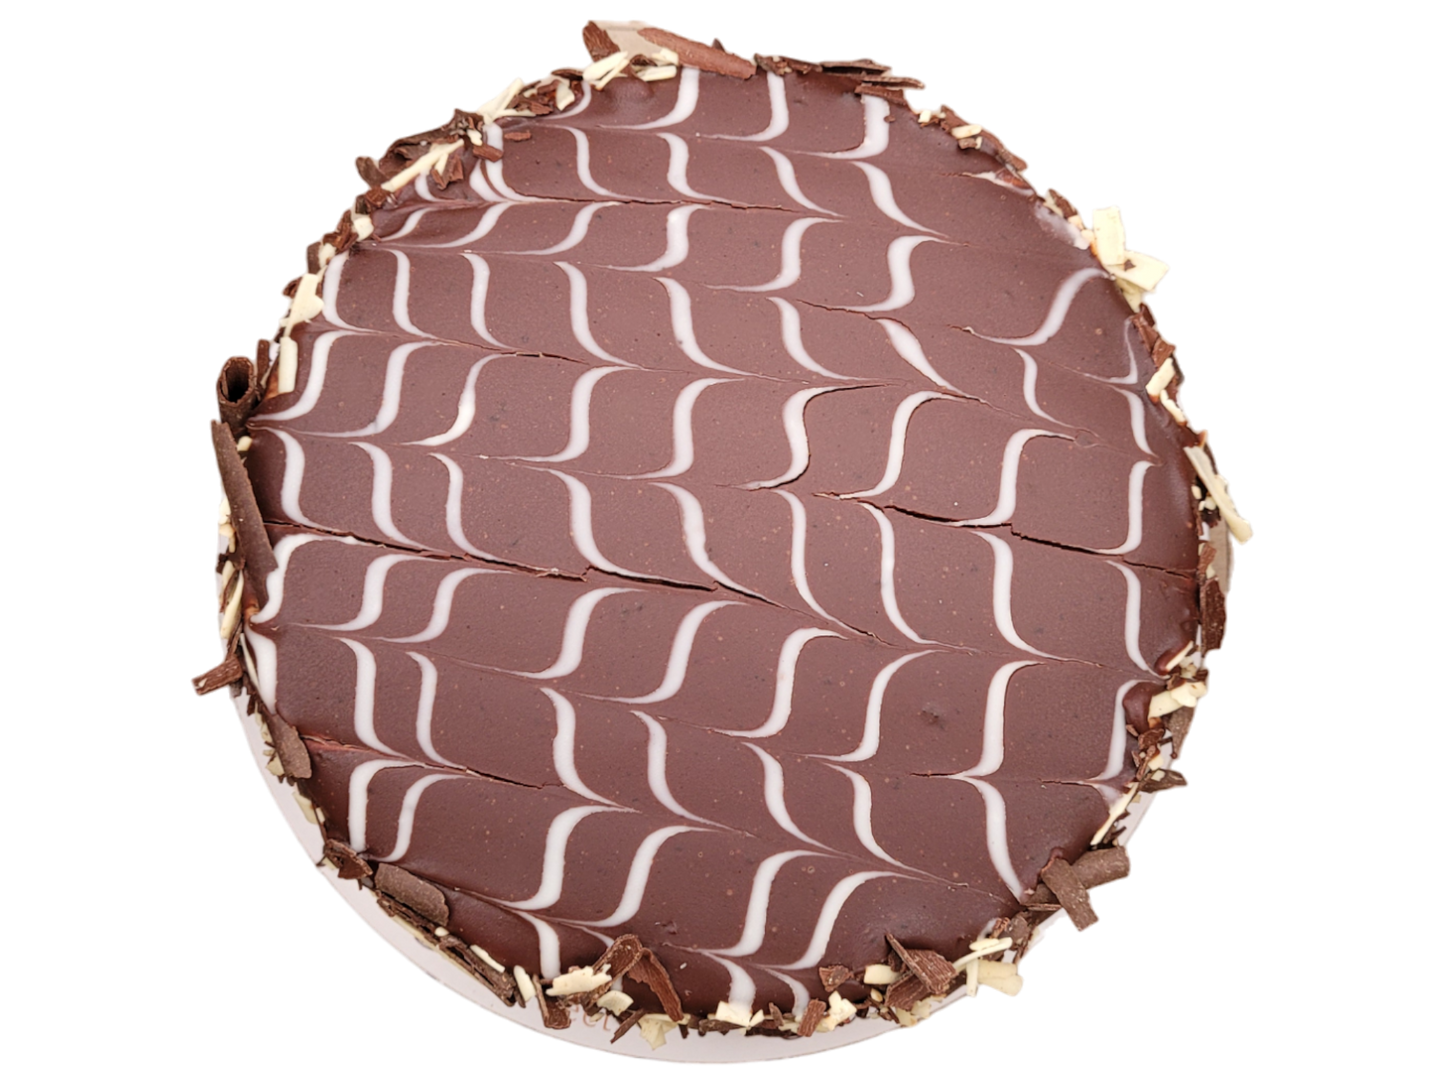 8" triple chocolate cake